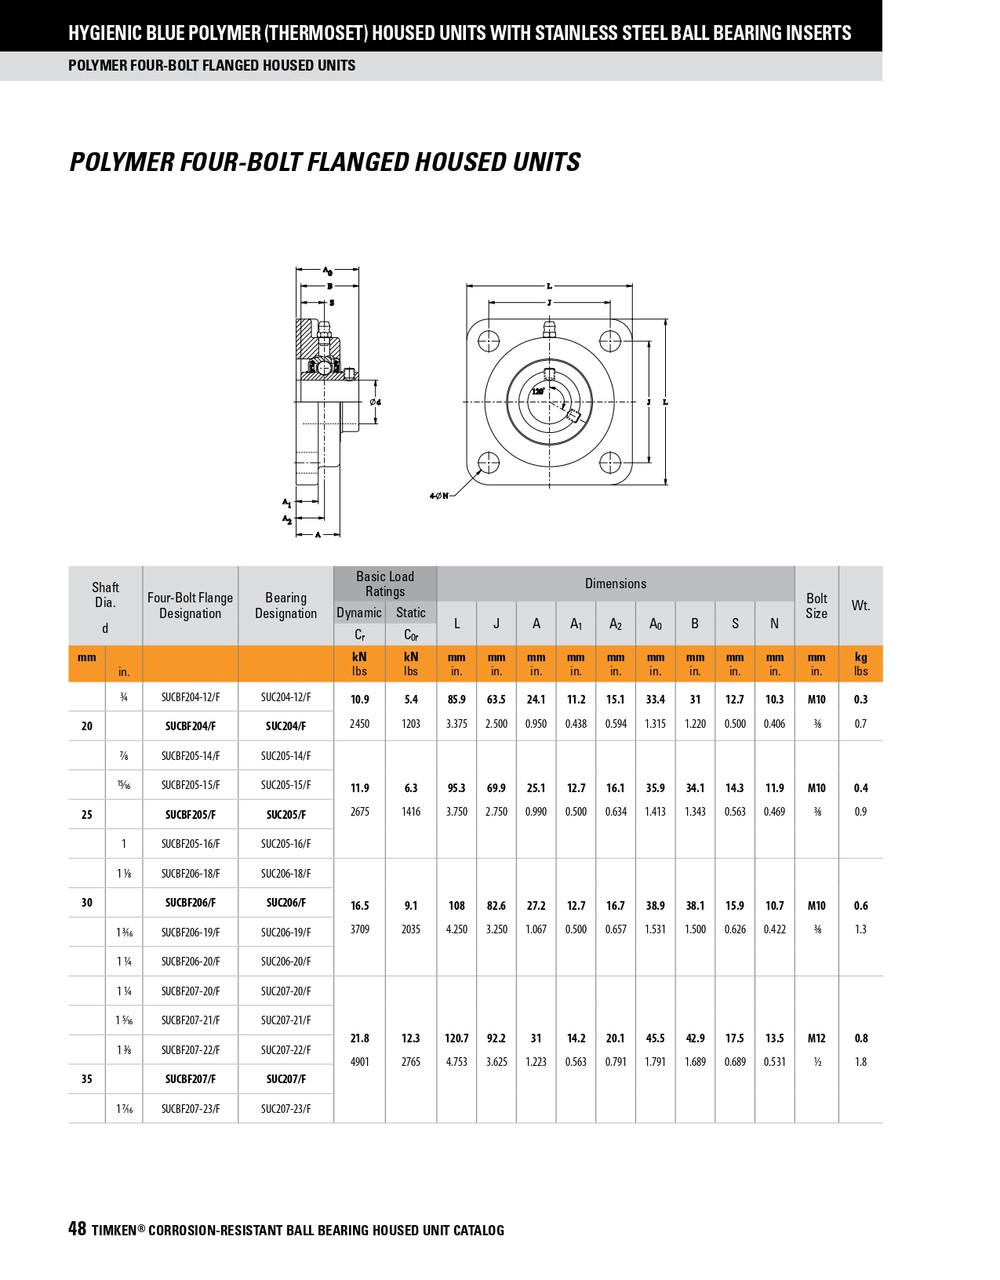 45mm Hygienic Polymer Set Screw Flange Block Assembly   SUCBF209/F